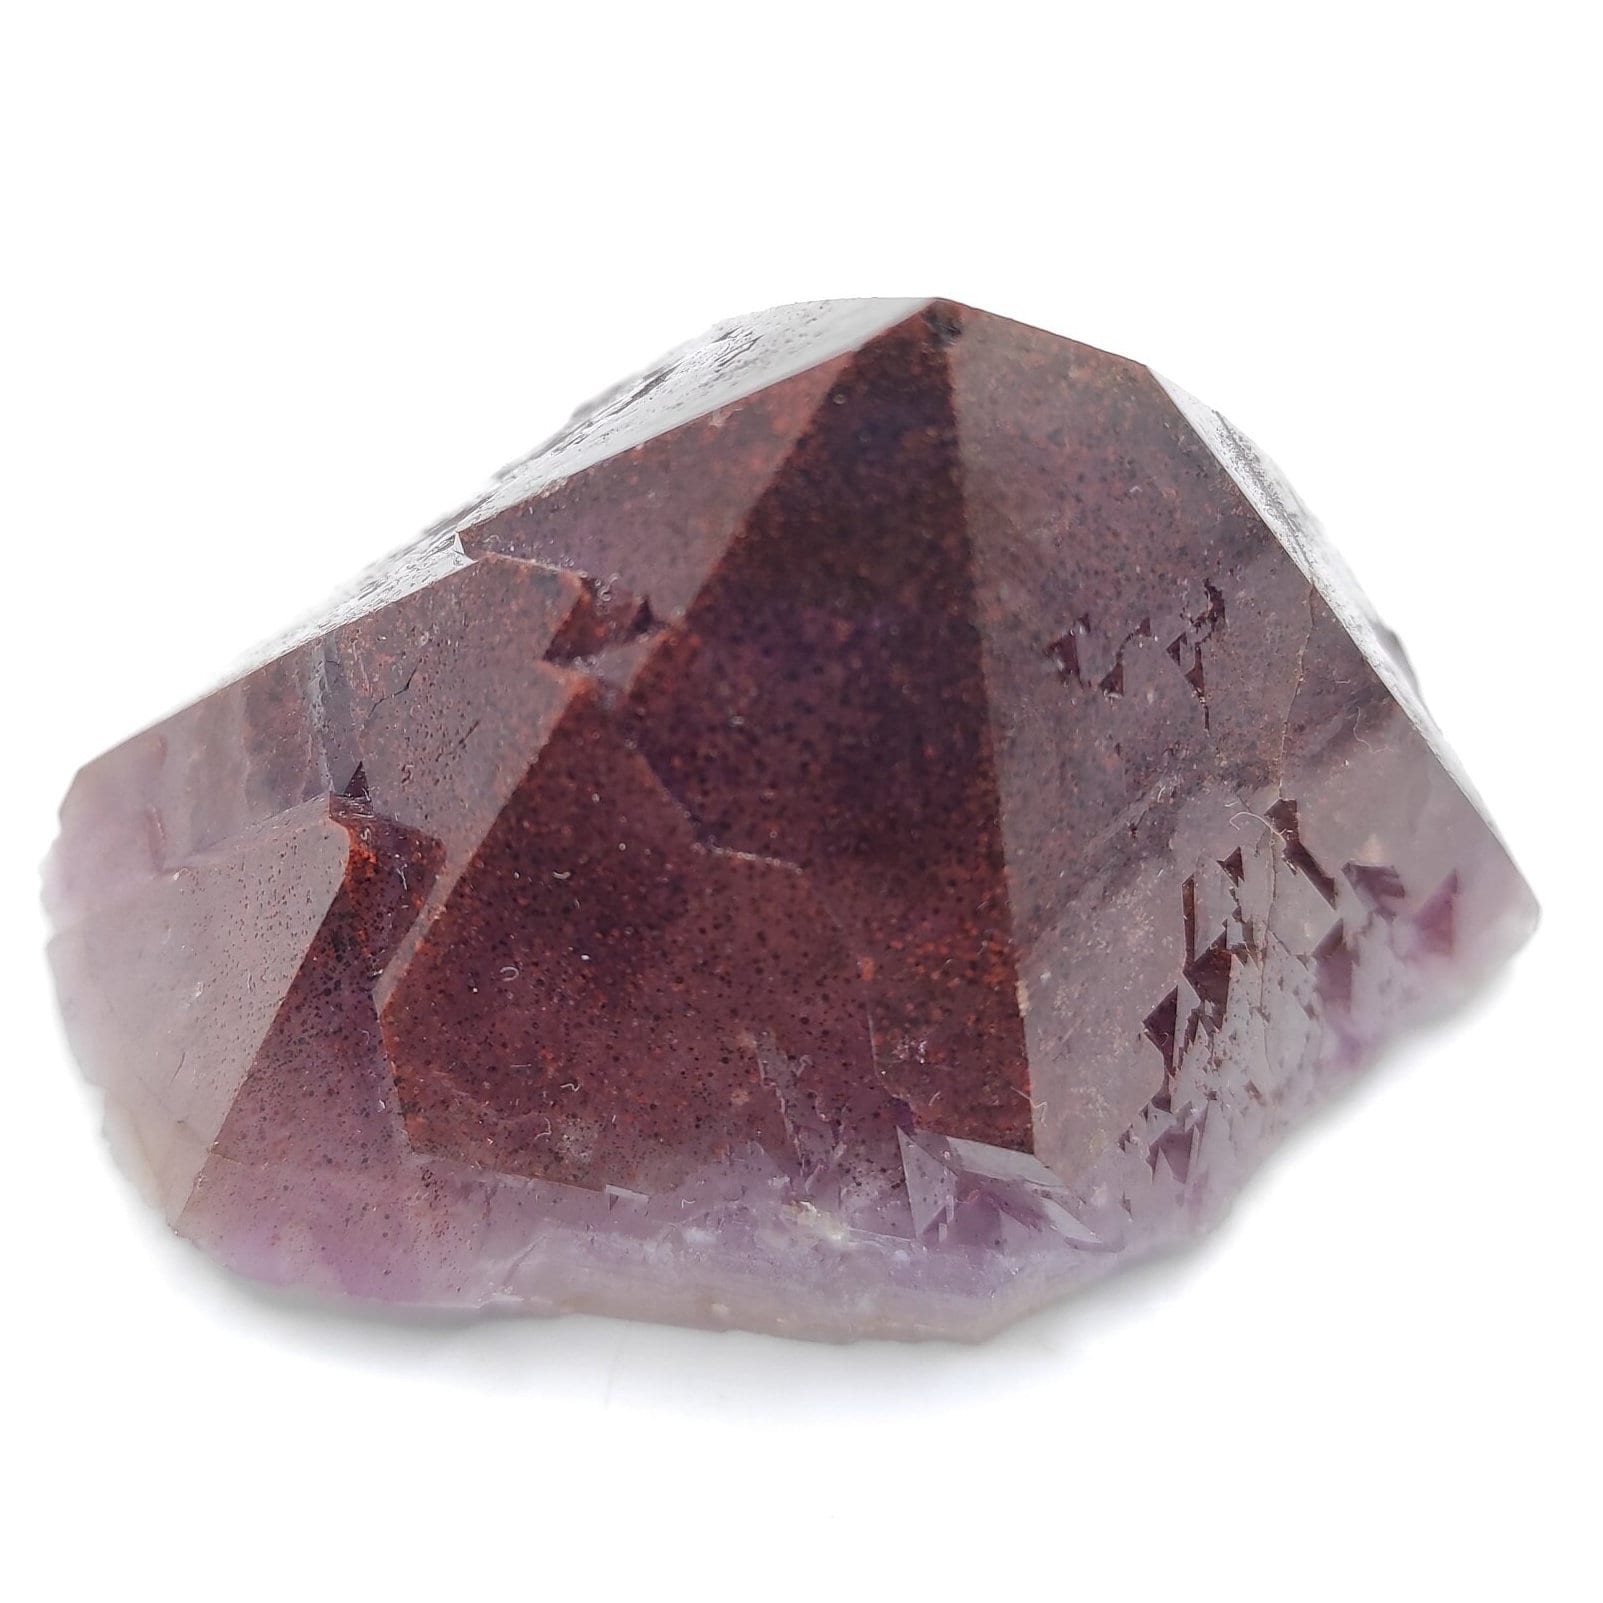 117g Thunder Bay Amethyst - Hematite Coated Amethyst - Canadian Amethyst Crystal - Amethyst Thunder Bay - Red Amethyst - Mineral Specimen